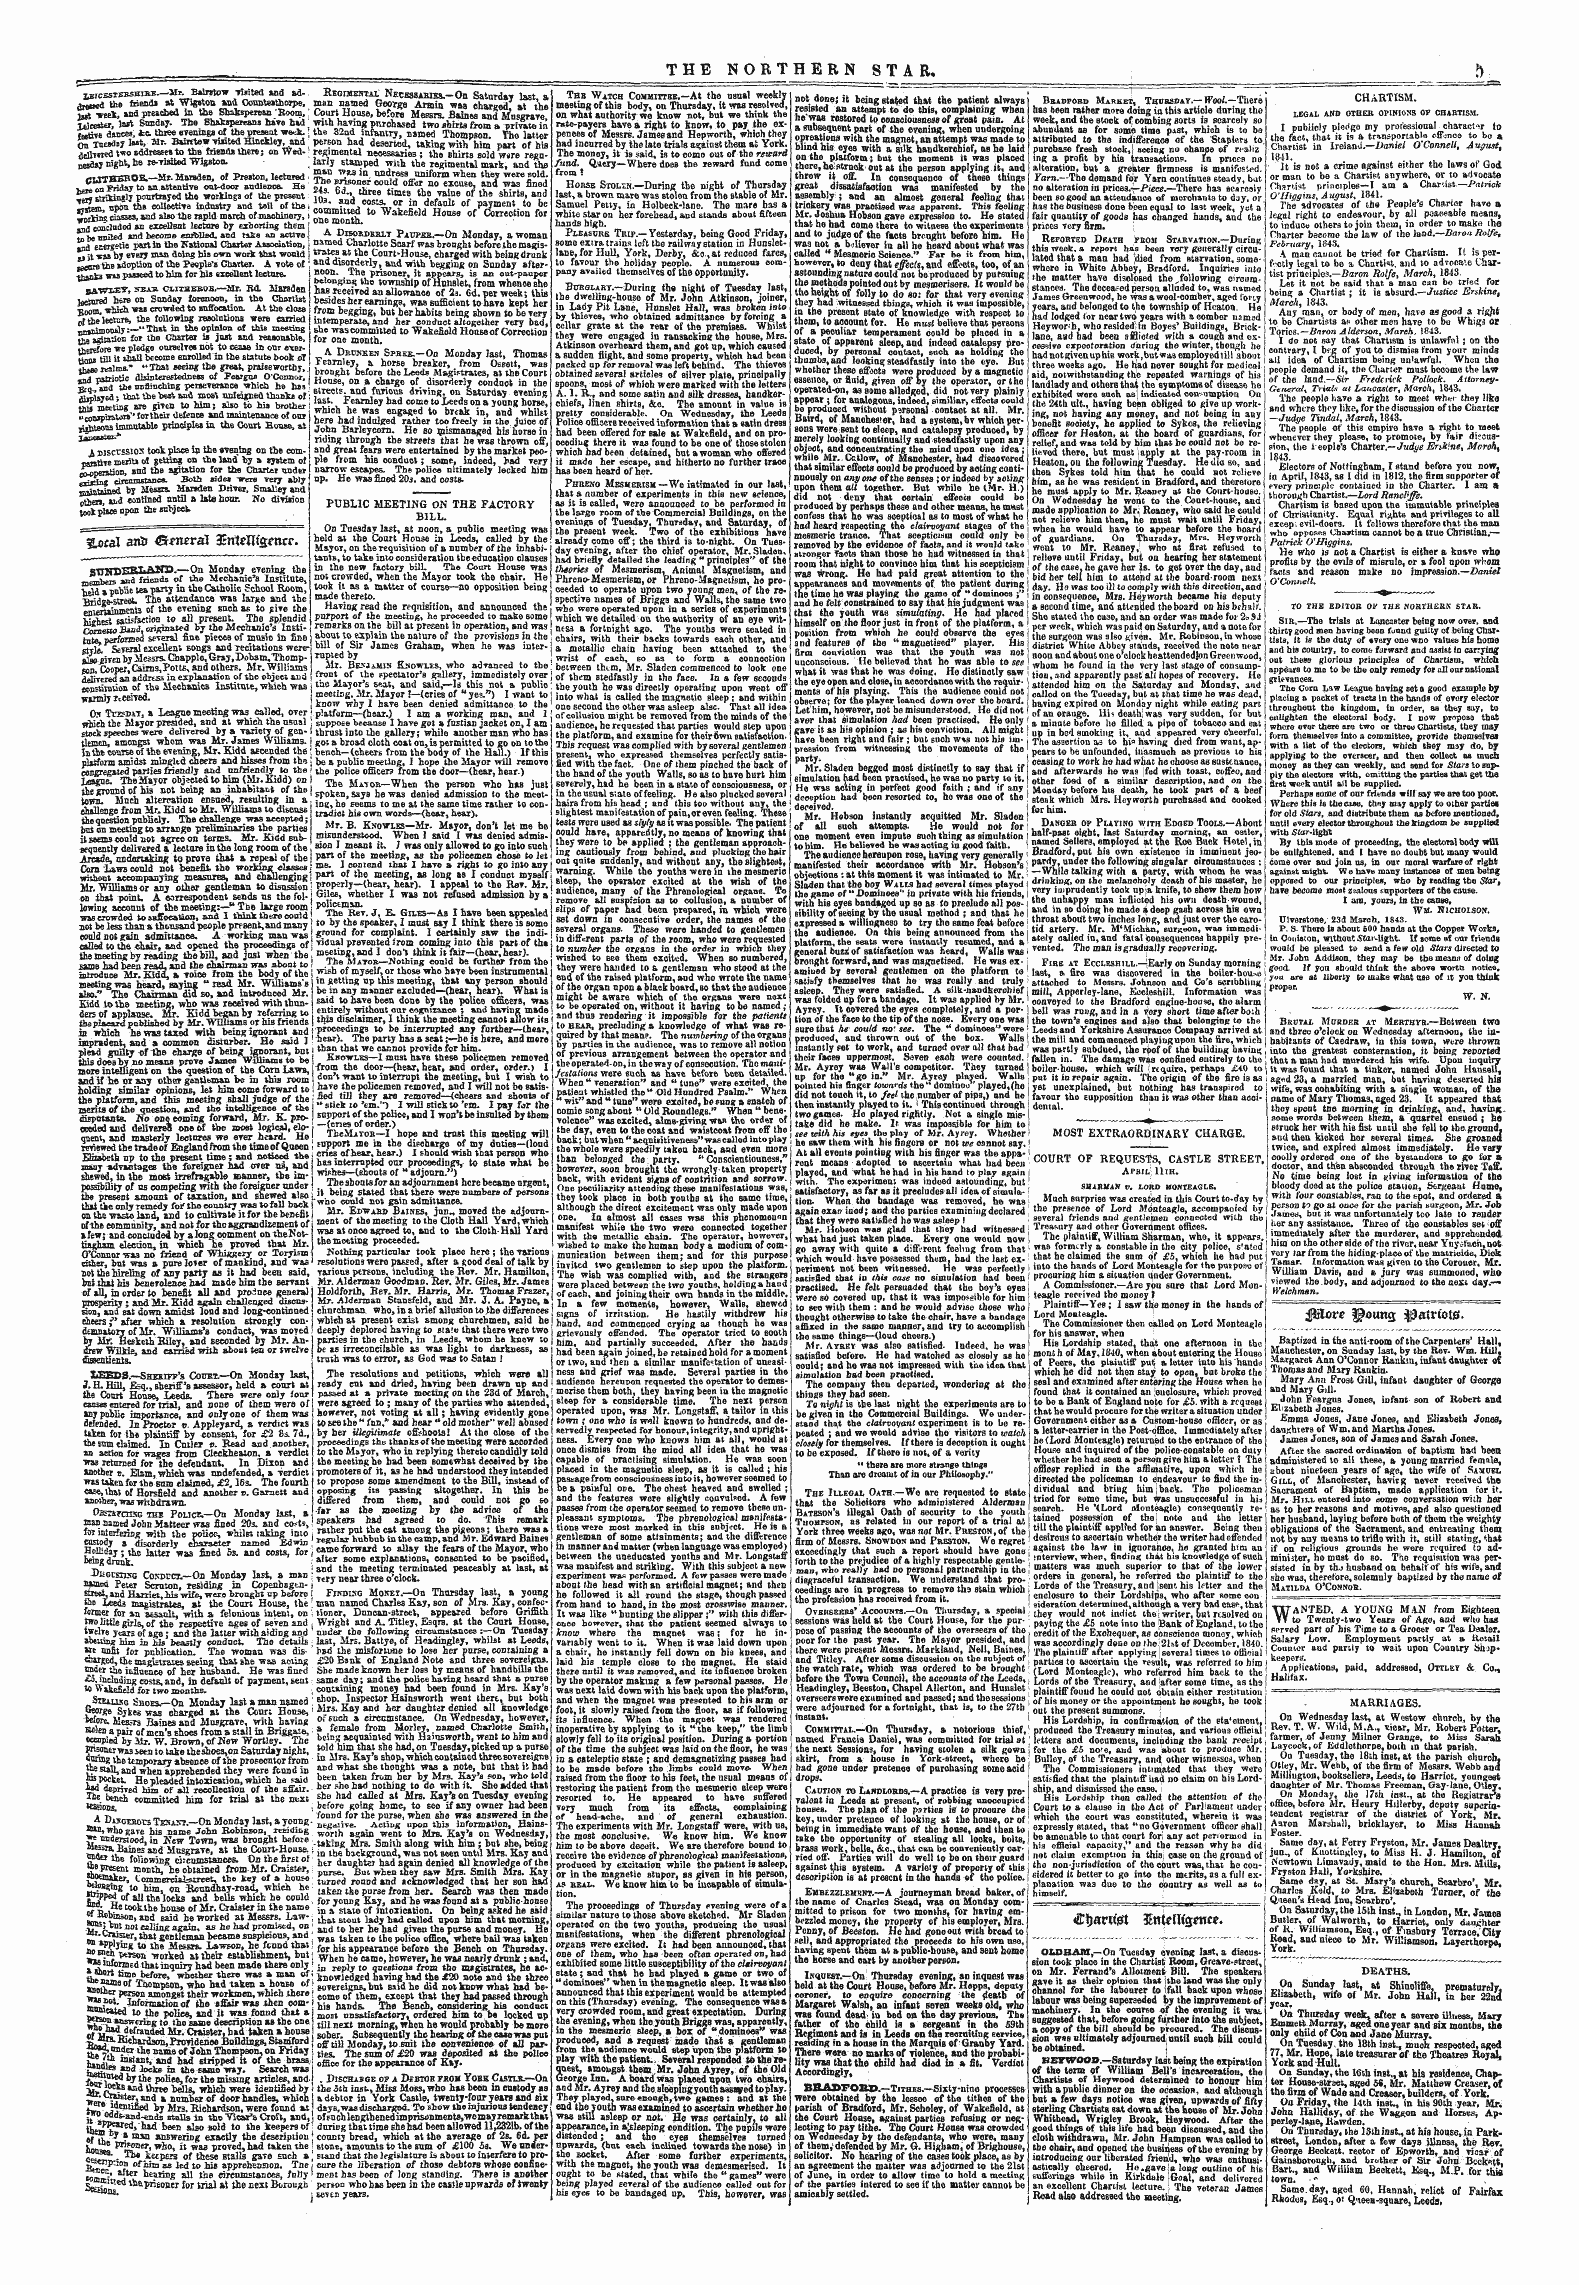 Northern Star (1837-1852): jS F Y, 5th edition: 5